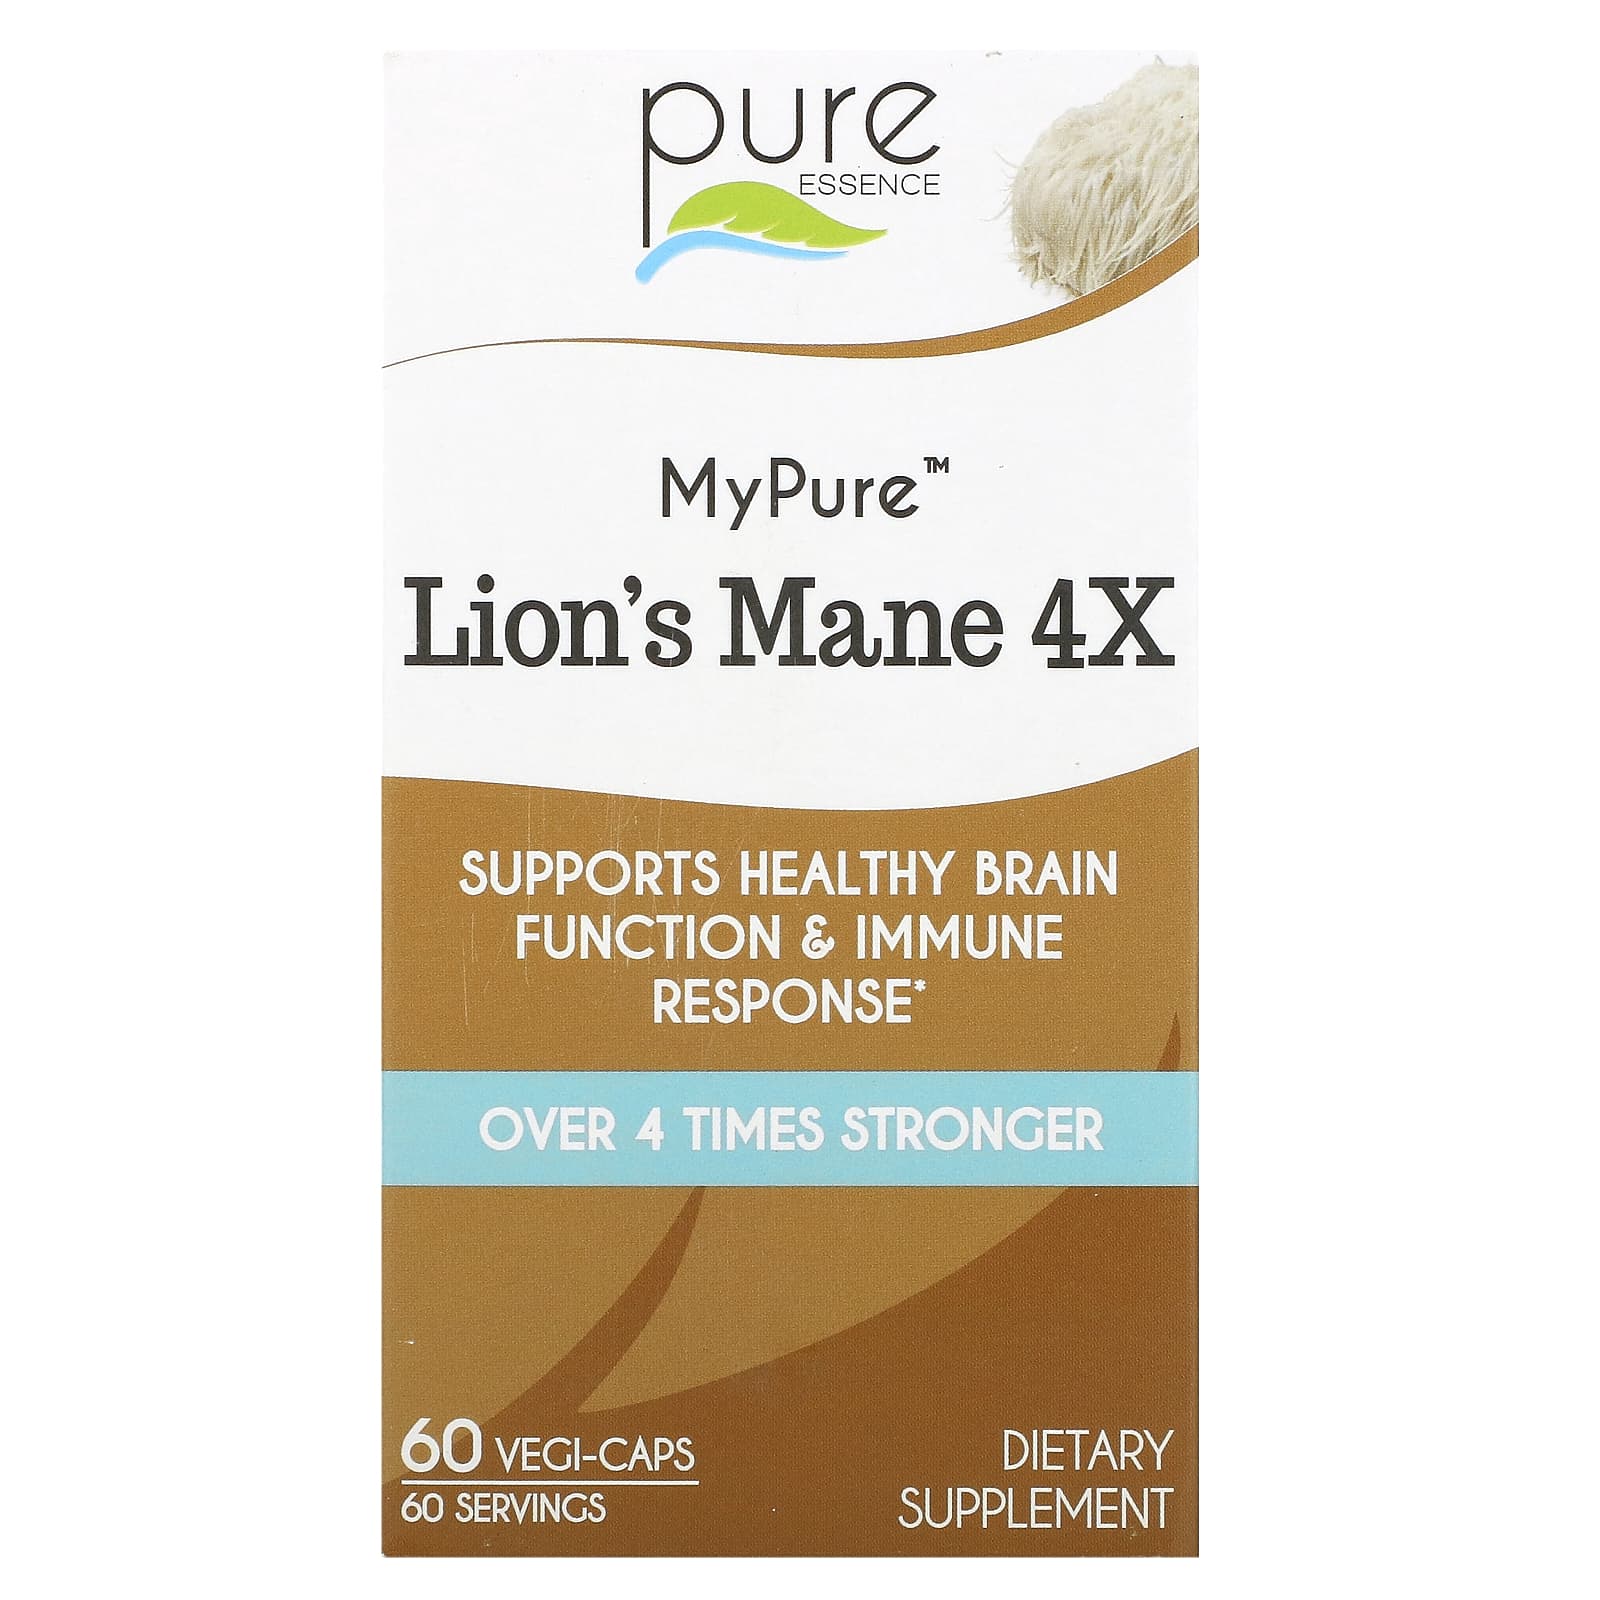 Pure Essence MyPure Lion's Mane 4X 60 Vegi-Caps